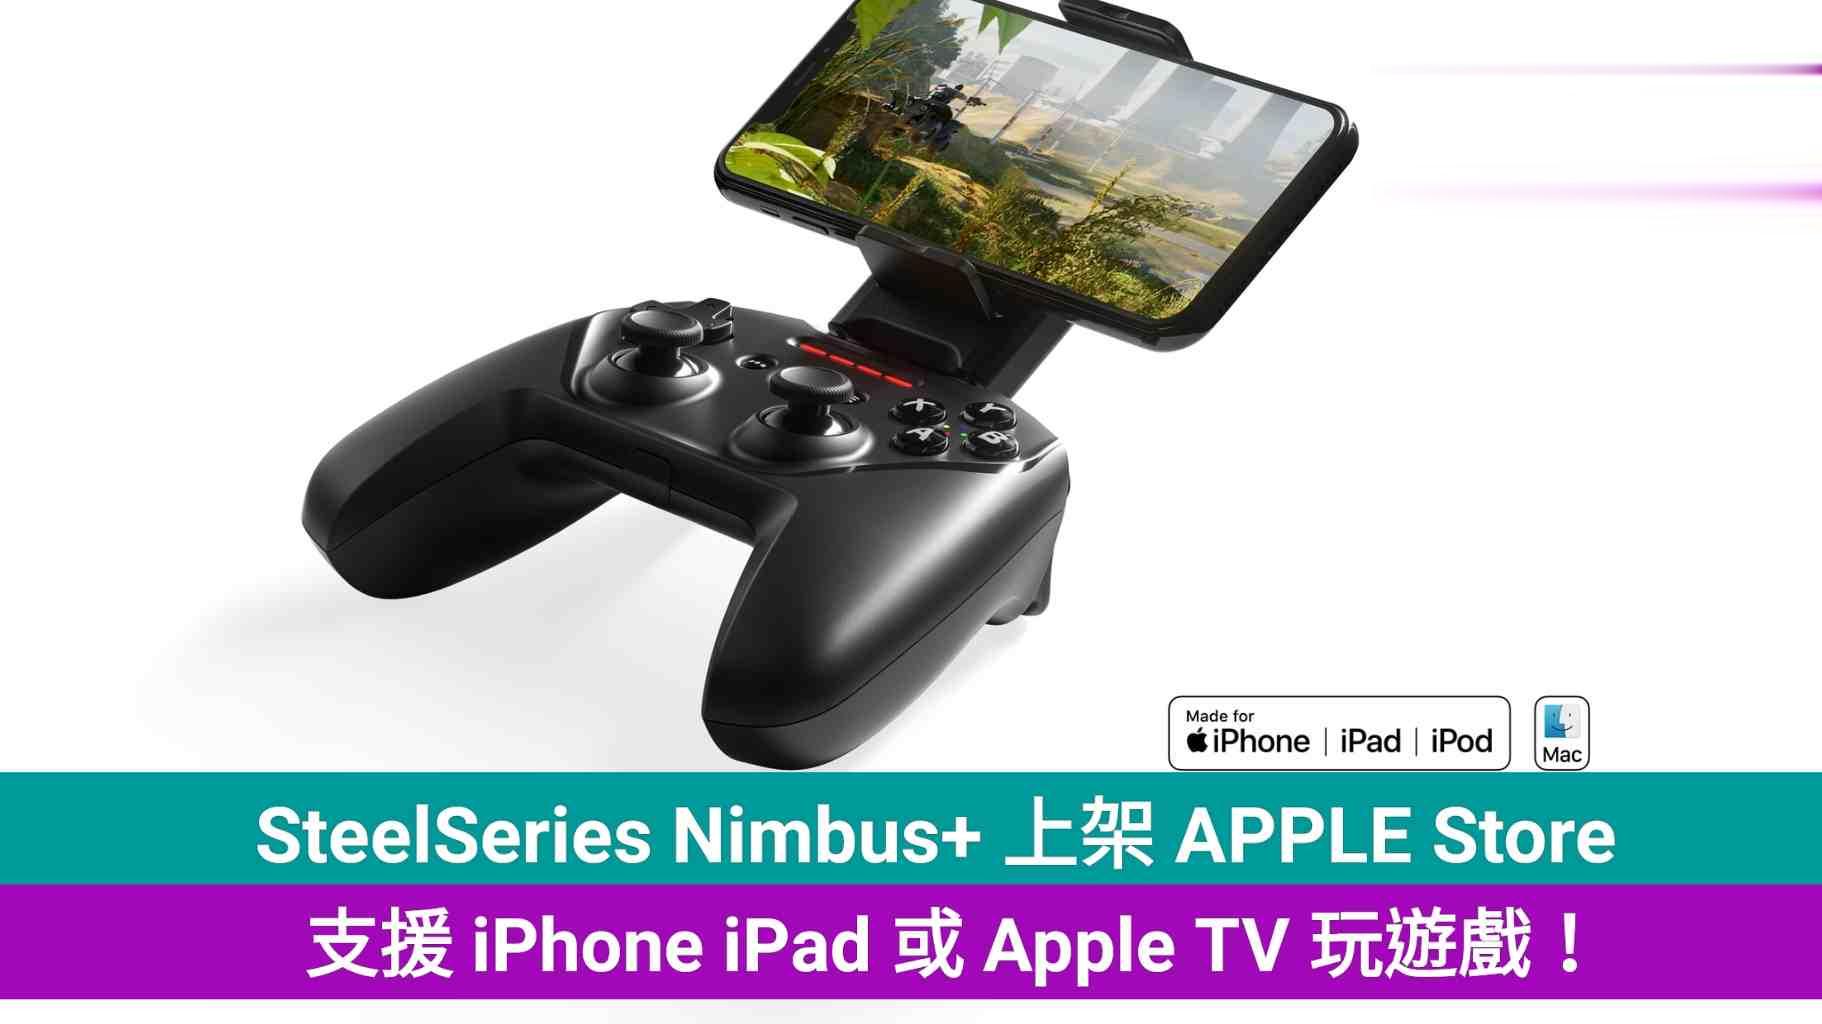 SteelSeries Nimbus+ 上架 APPLE Store，支援 iPhone iPad 或 Apple TV